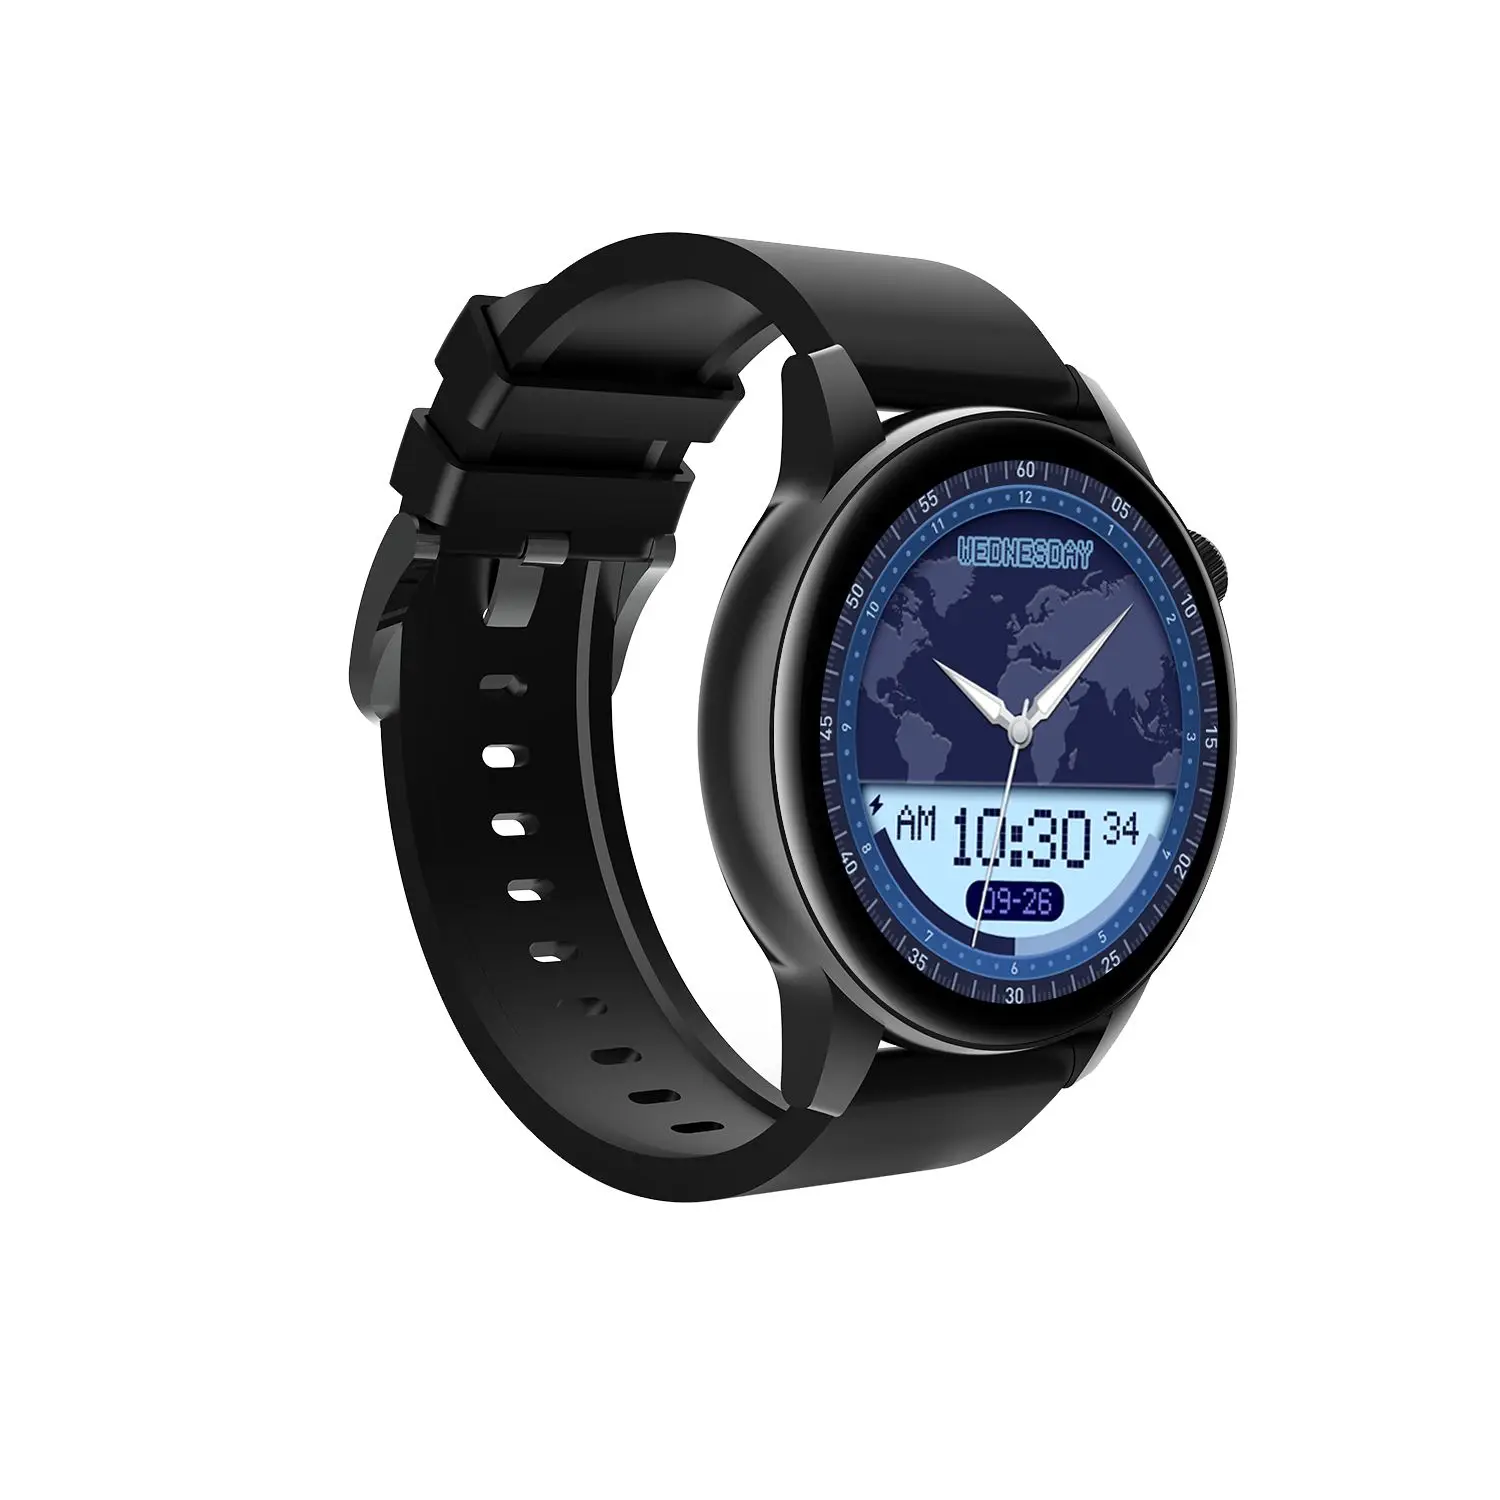 Hot Sale Gs3 Smart Watch Fitness Tracker Ip67 Waterproof Rotate Button Heart Rate Nfc Smartwatch Reloje Inteligente - Buy Reloje Inteligente,Nfc Smartwatch,Waterproof Smart Watch Product on Alibaba.com